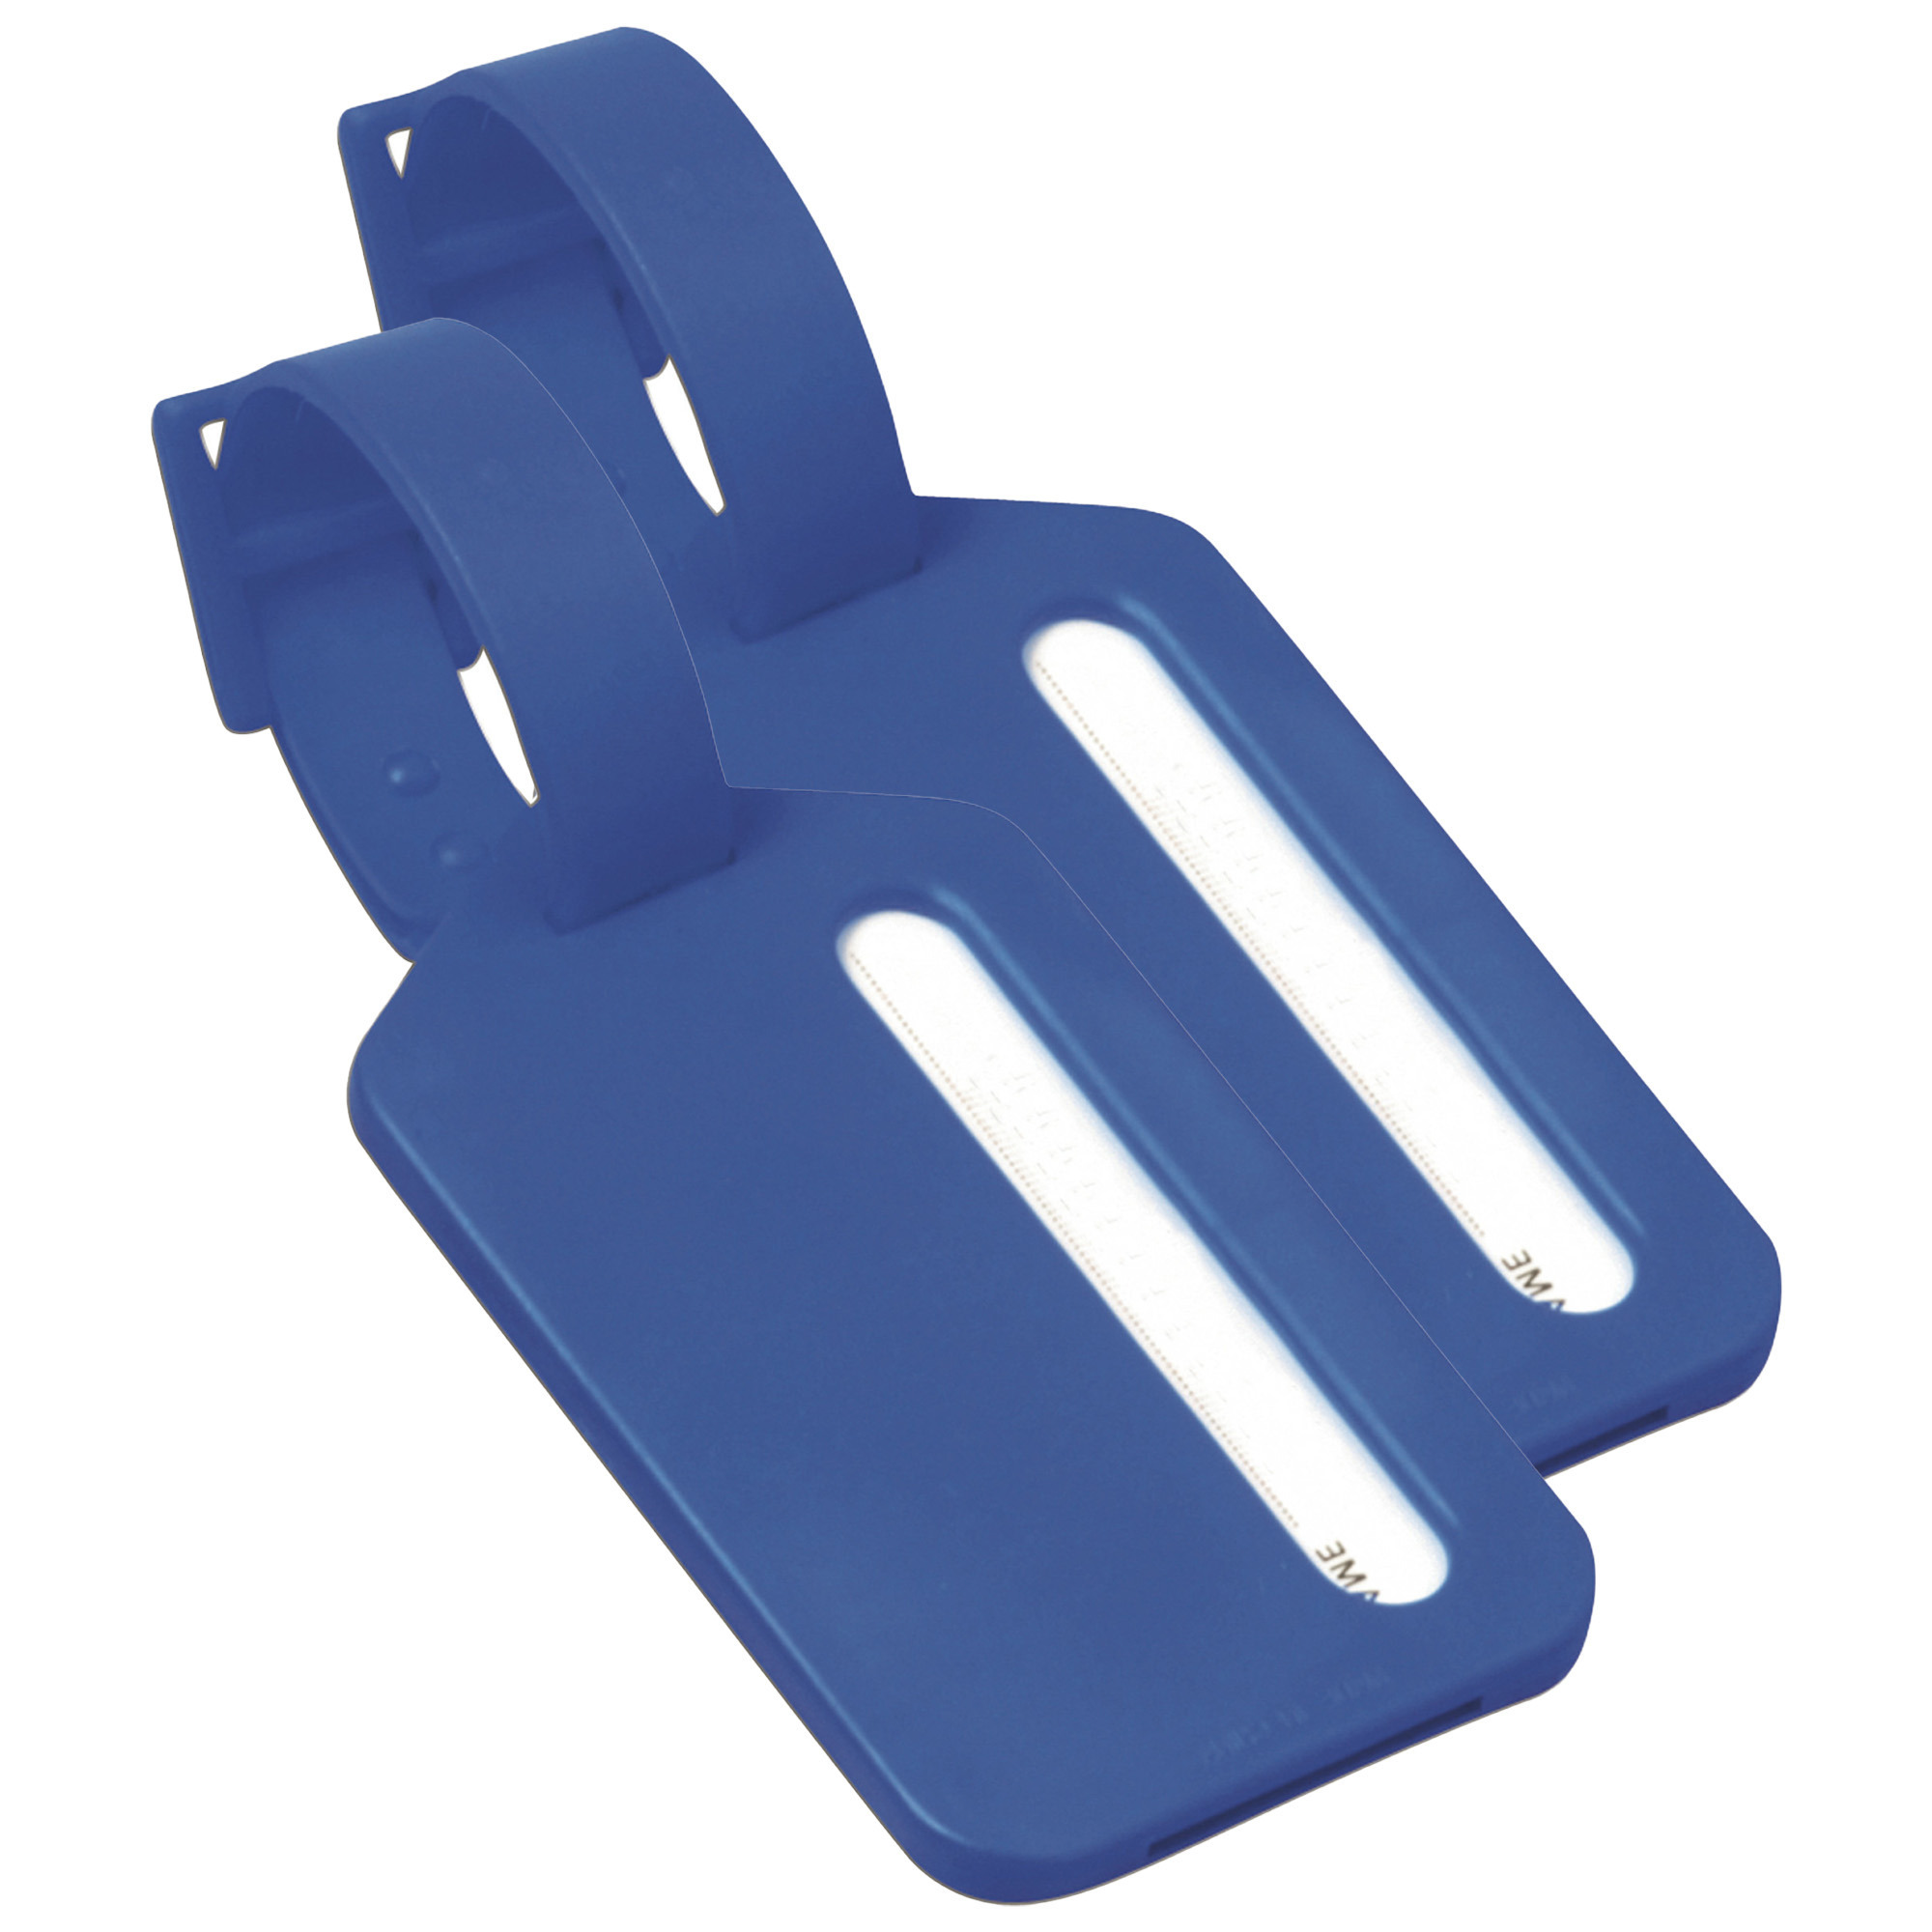 Kofferlabel Janina 2x blauw 9 x 5 cm reiskoffer-handbagage label